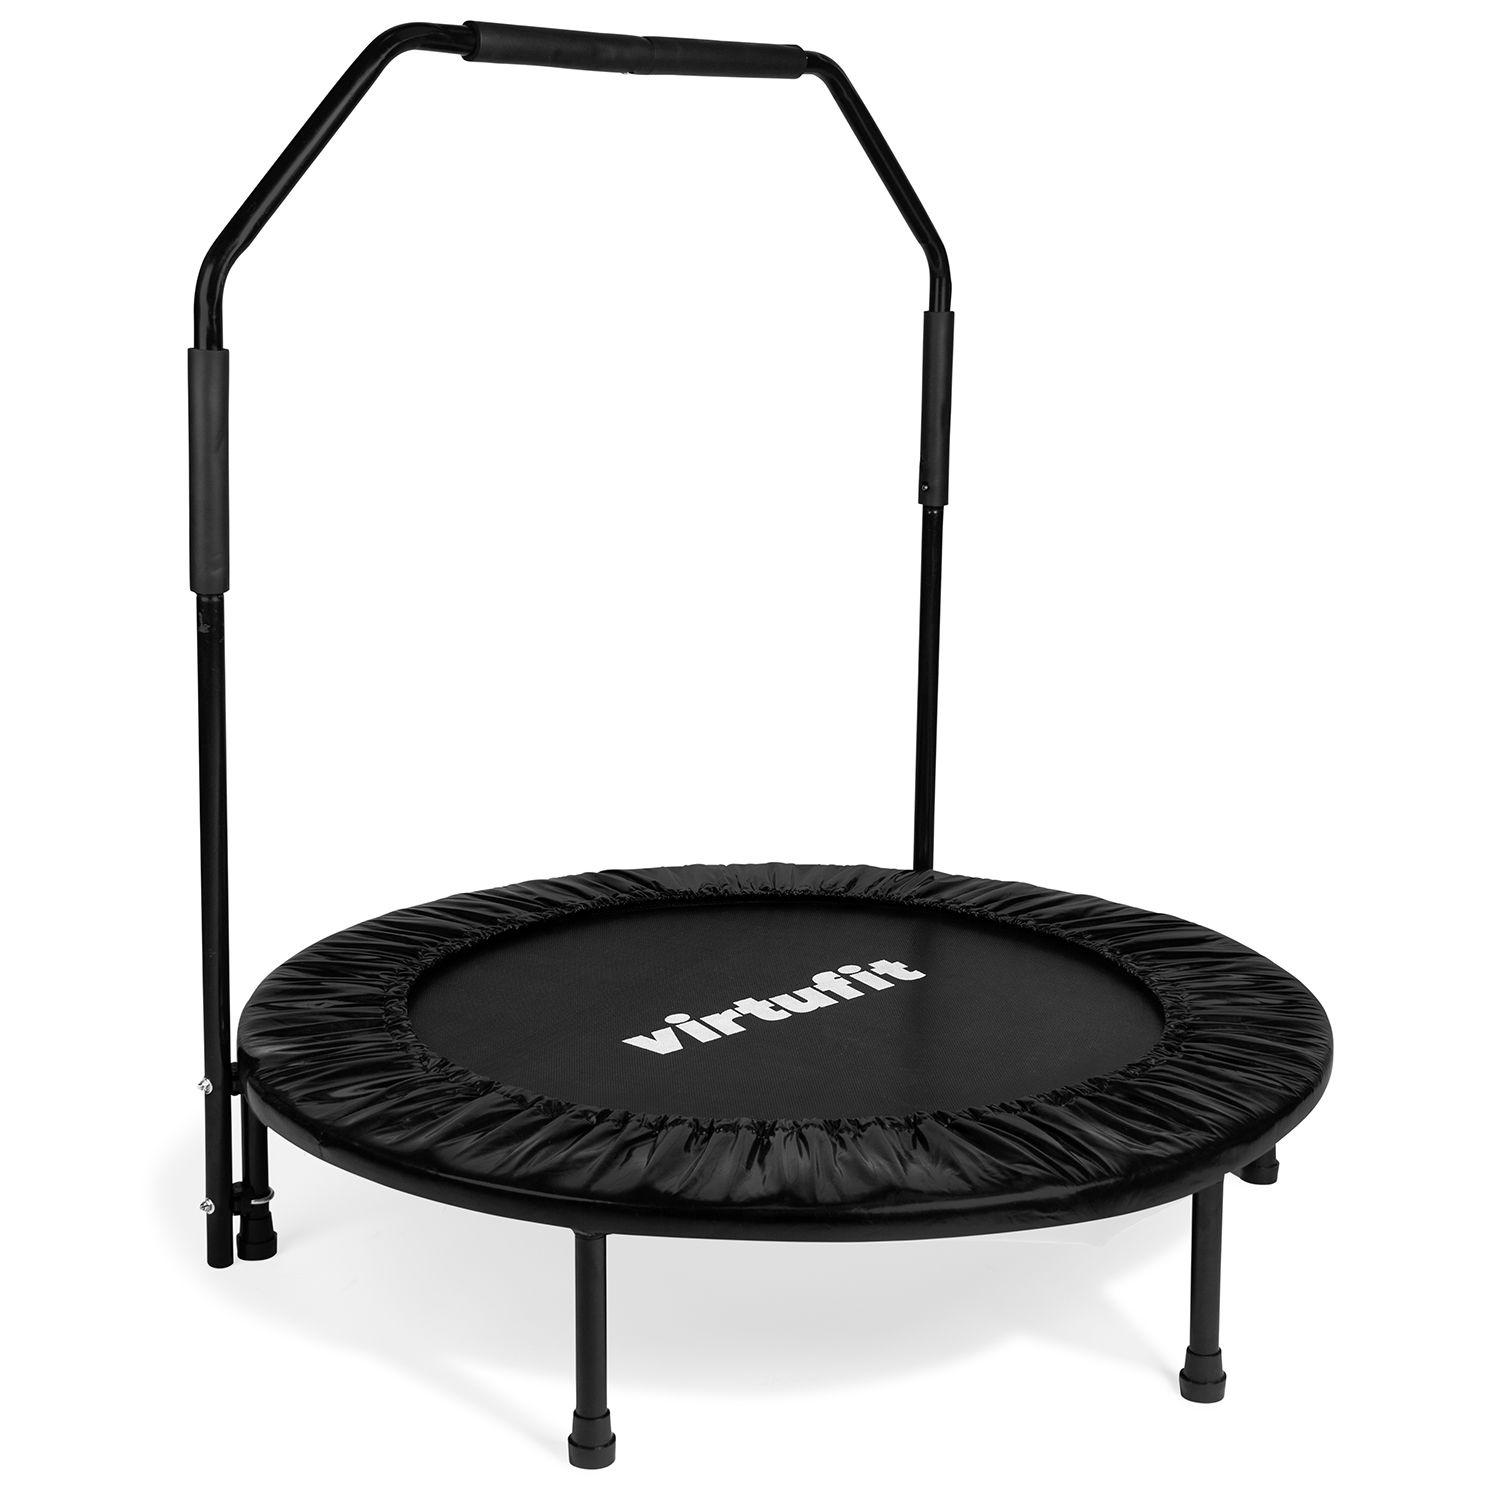 Aanpassing verticaal Arena VirtuFit Opvouwbare Fitness Trampoline met Handvat - 100 cm - Virtufit